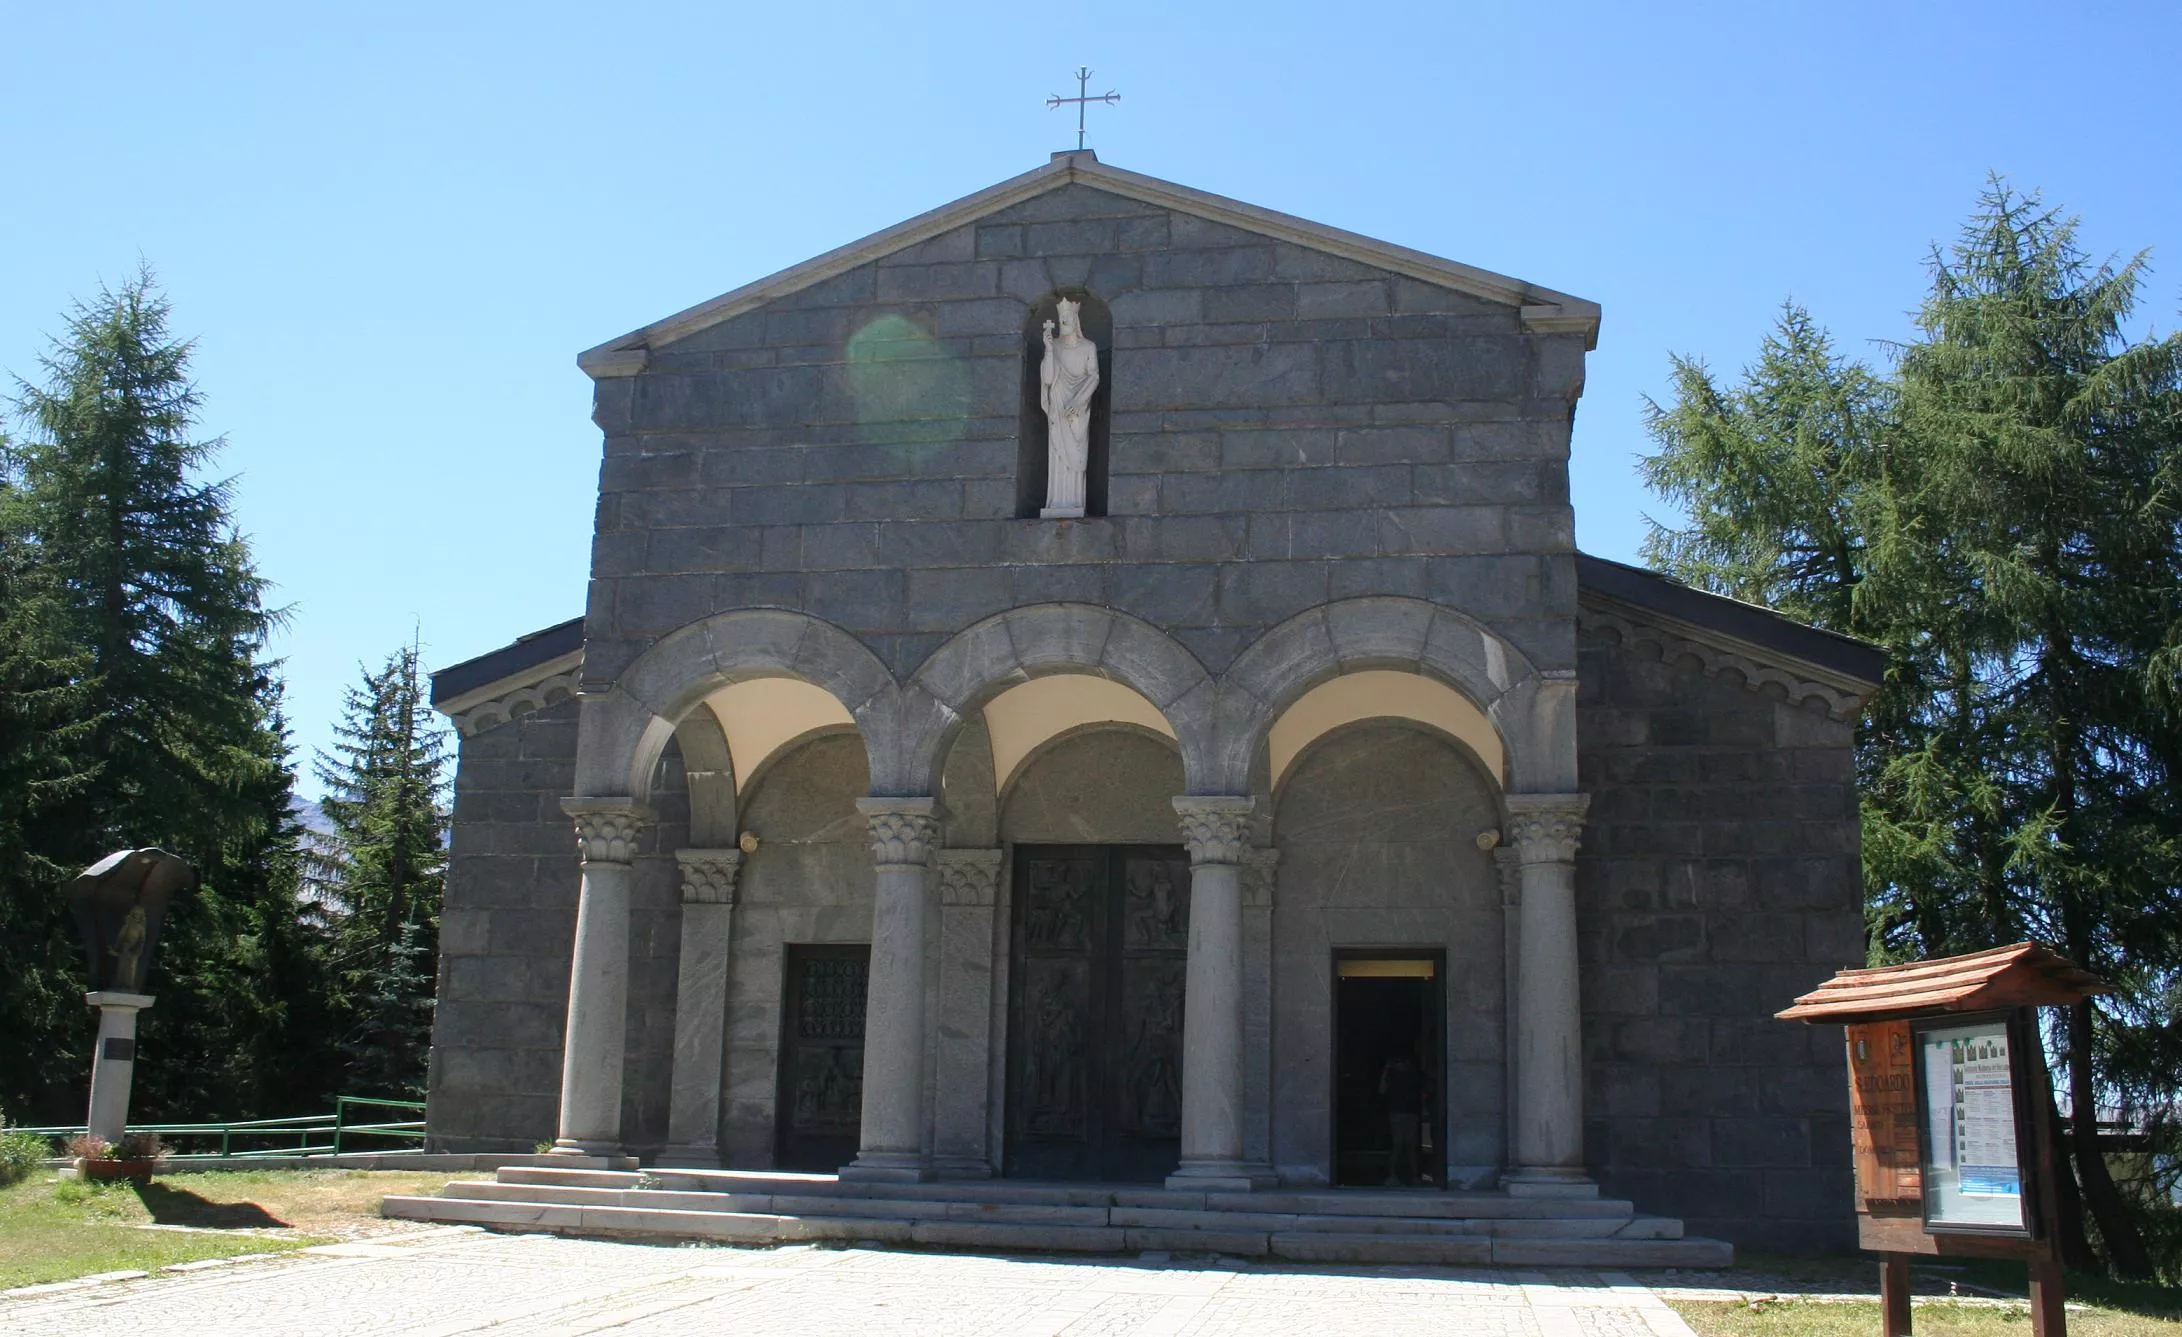 Chiesa San Edoardo in Italy, Europe | Architecture - Rated 0.7